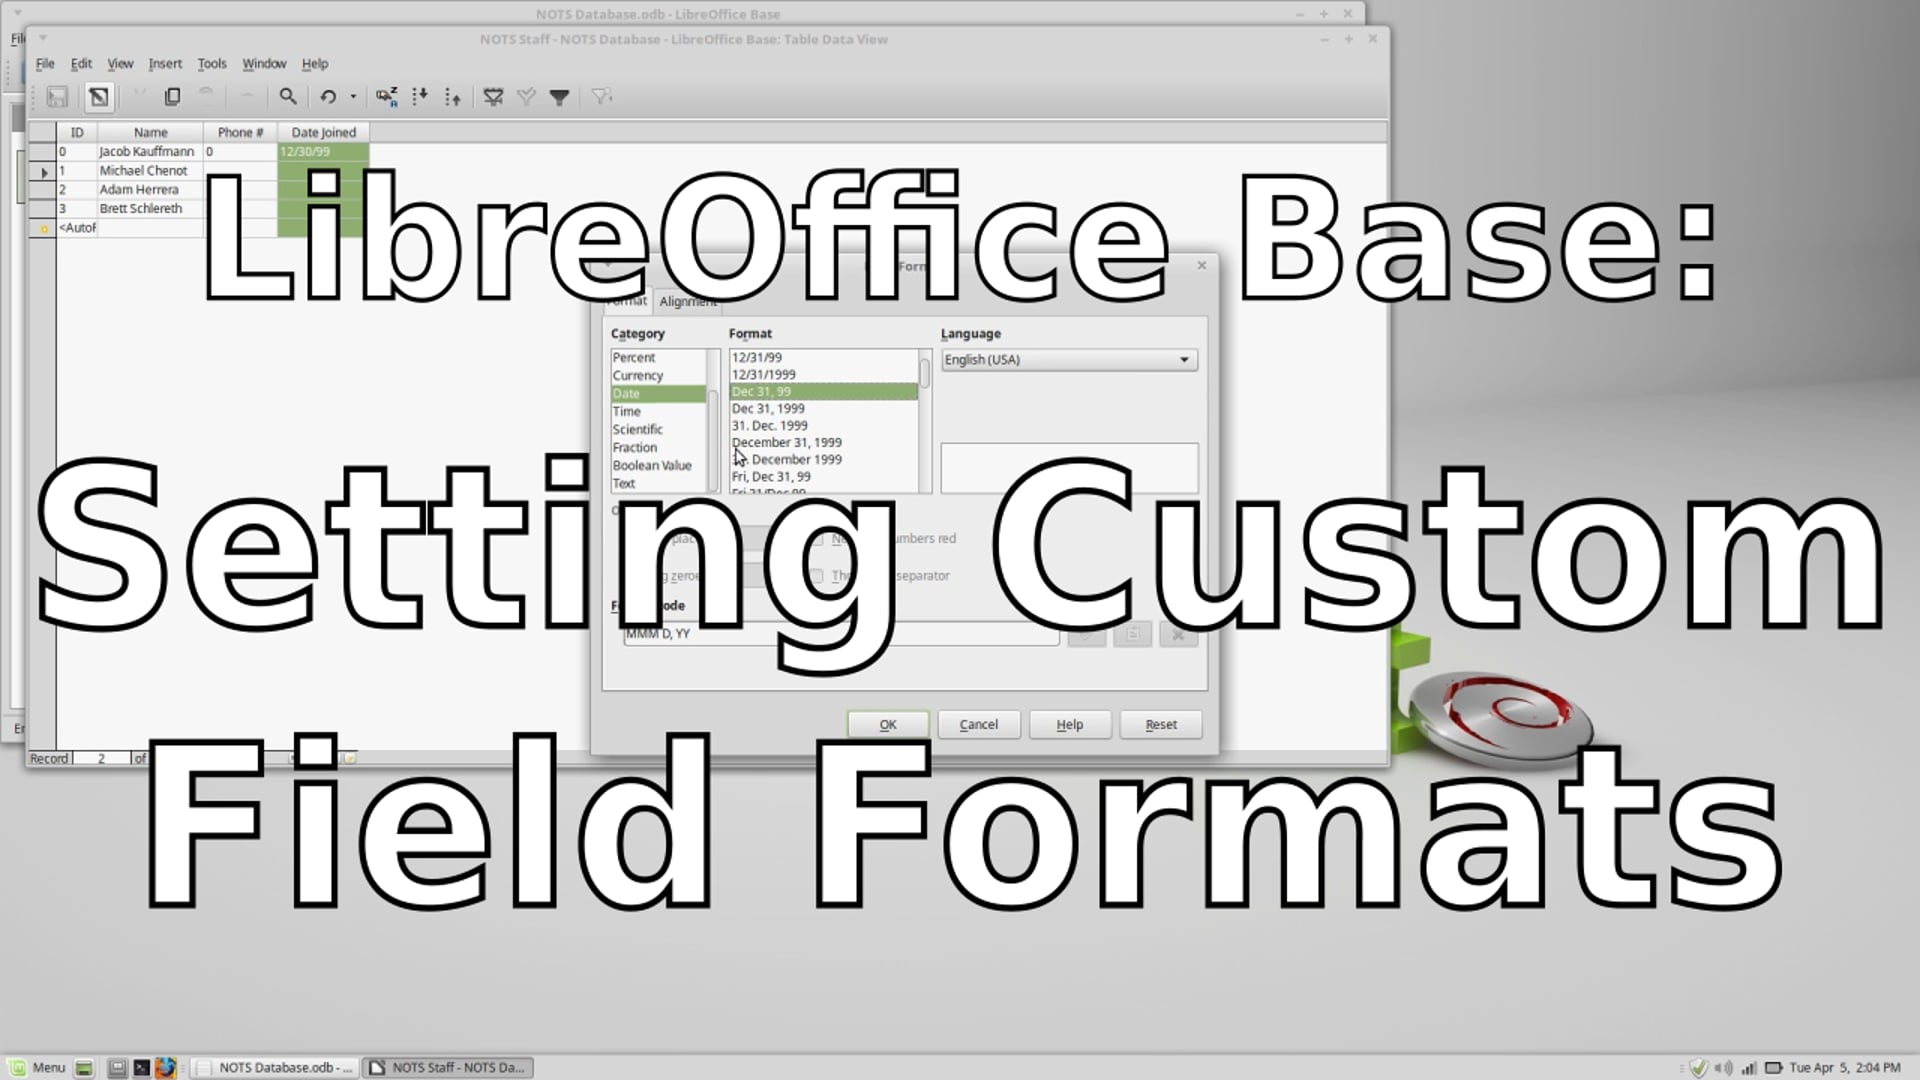 Setting Custom Field Formats in LibreOffice Base